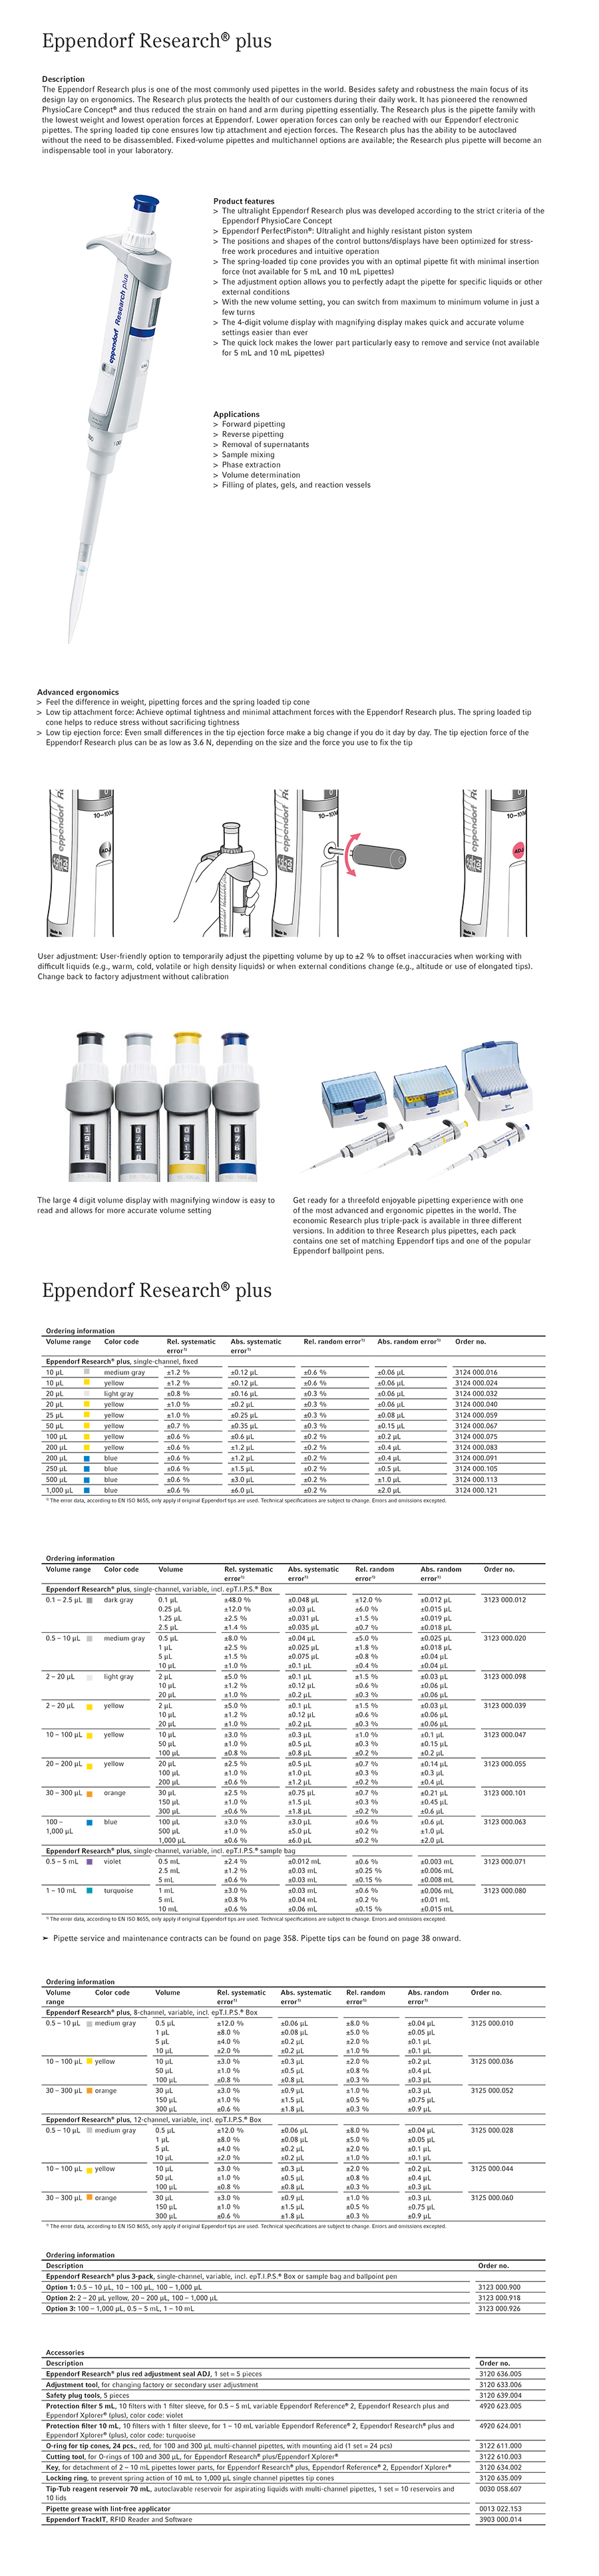 Eppendorf Research® plus.jpg